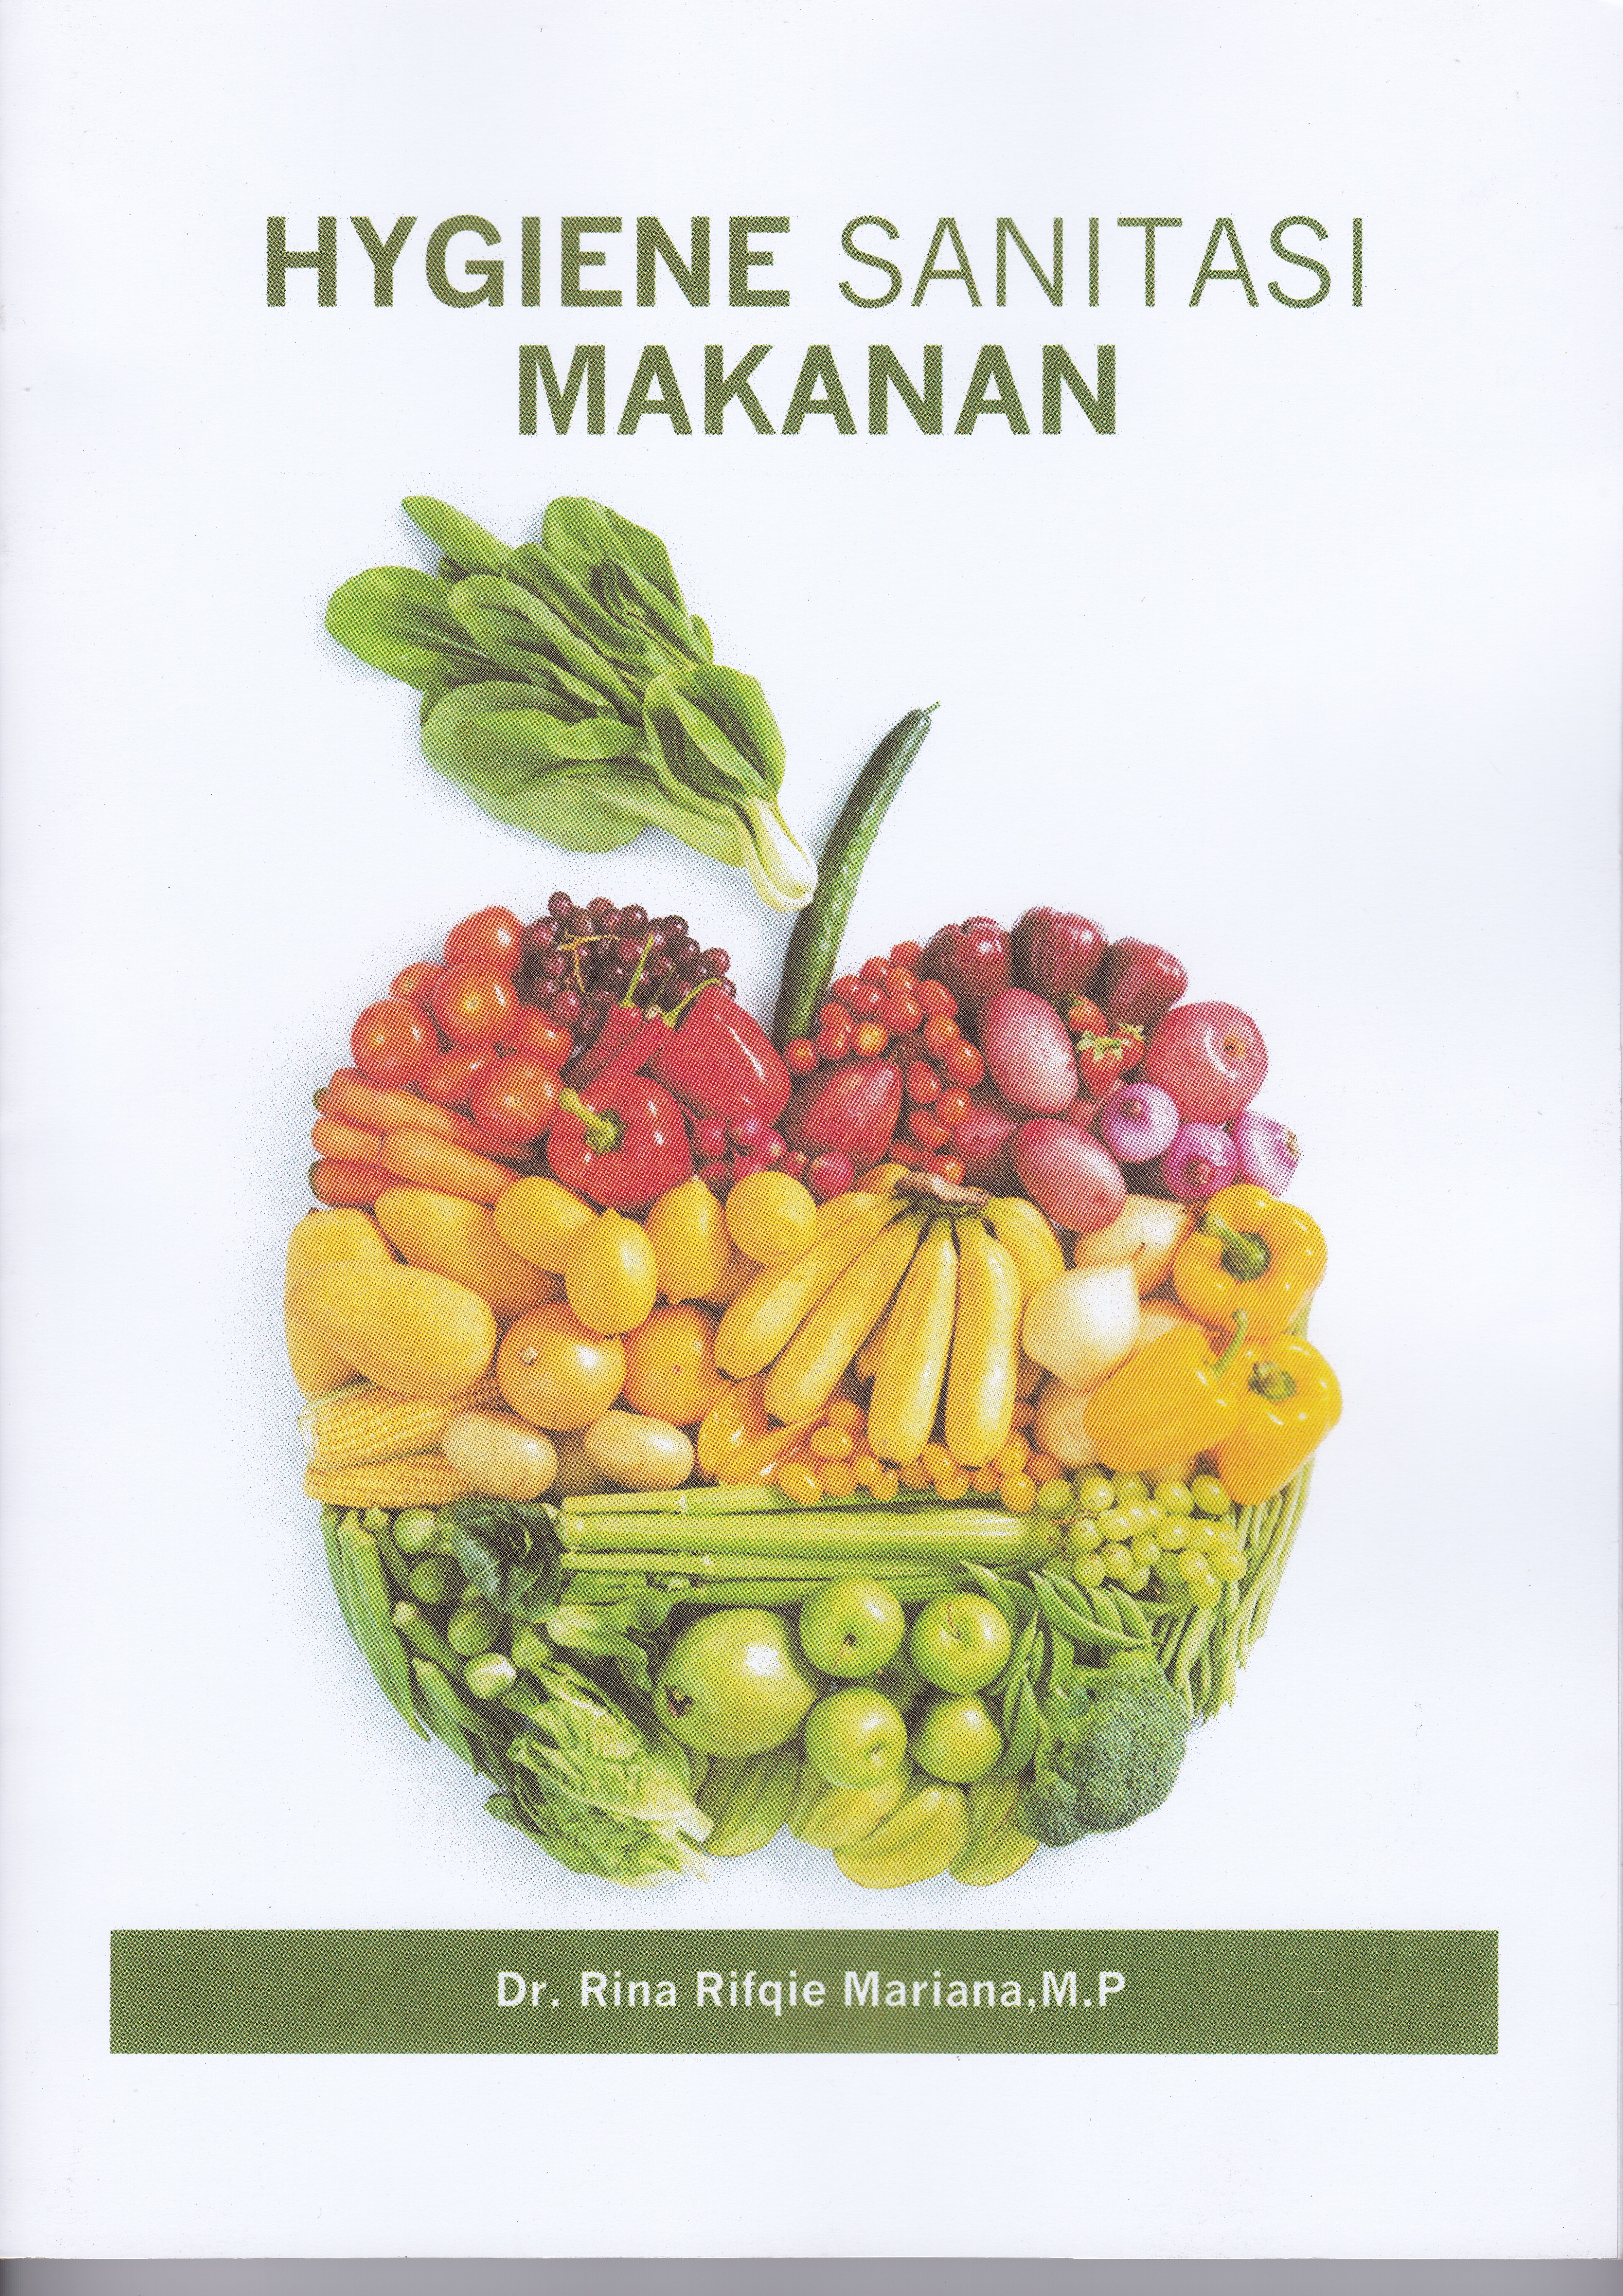 Buku “Hygiene Sanitasi Makanan” oleh Dr. Rina Rifqie Mariana, M.P.